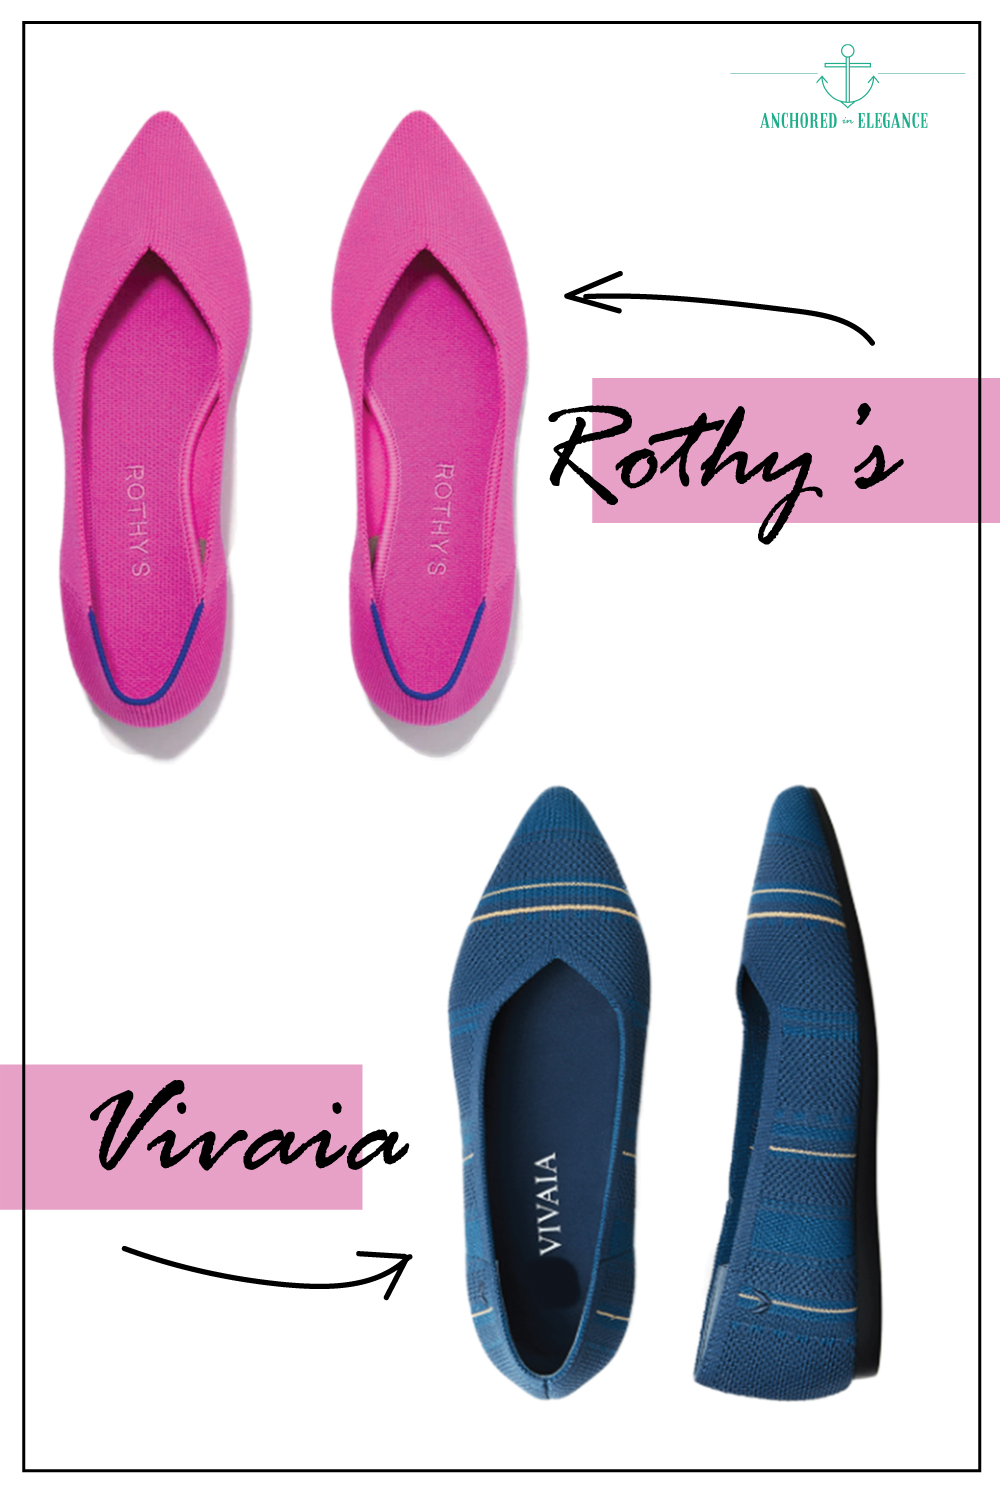 rothys vs vivaia side by side comparison